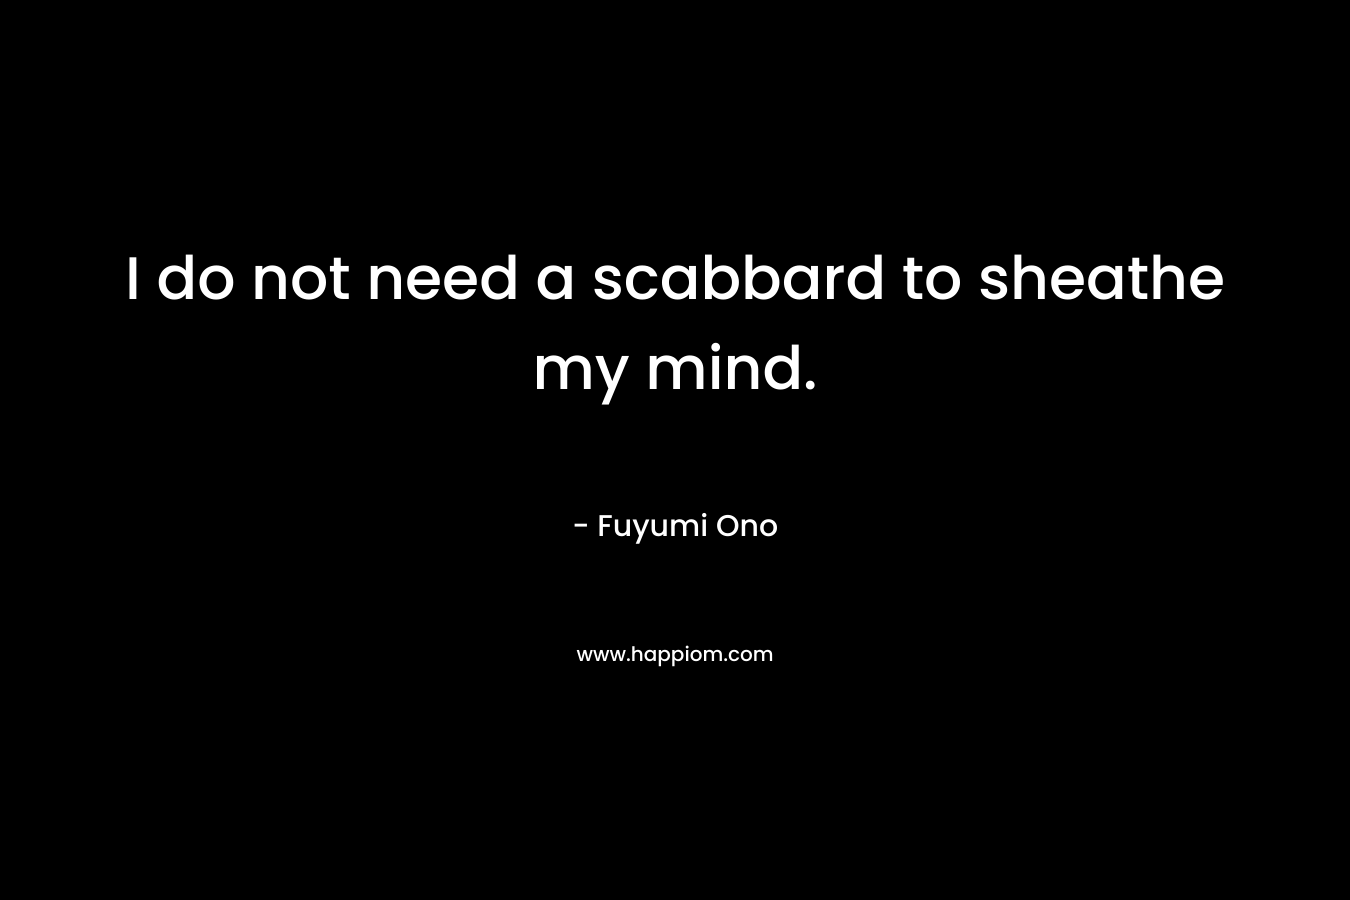 I do not need a scabbard to sheathe my mind.